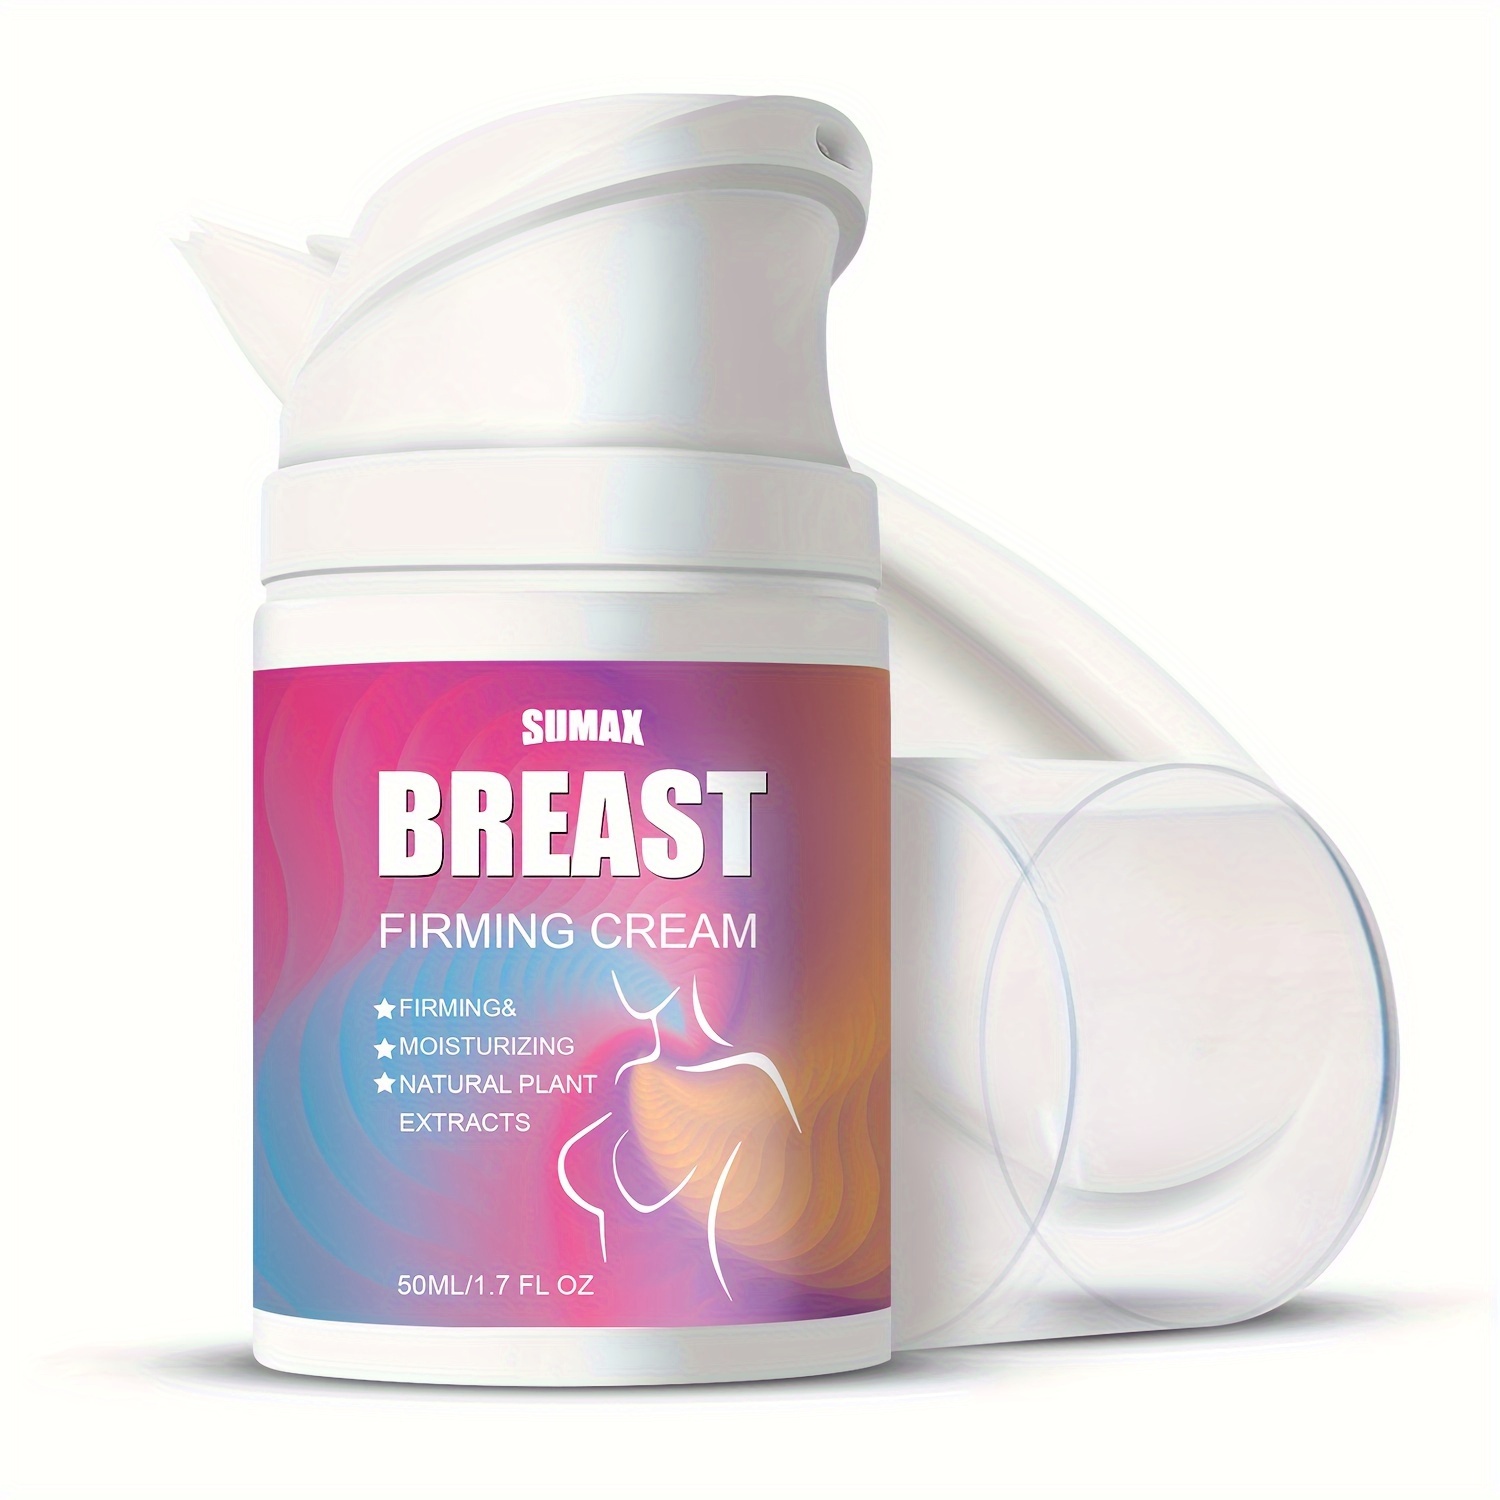 Buy Big Shape Breast Oil 50ml